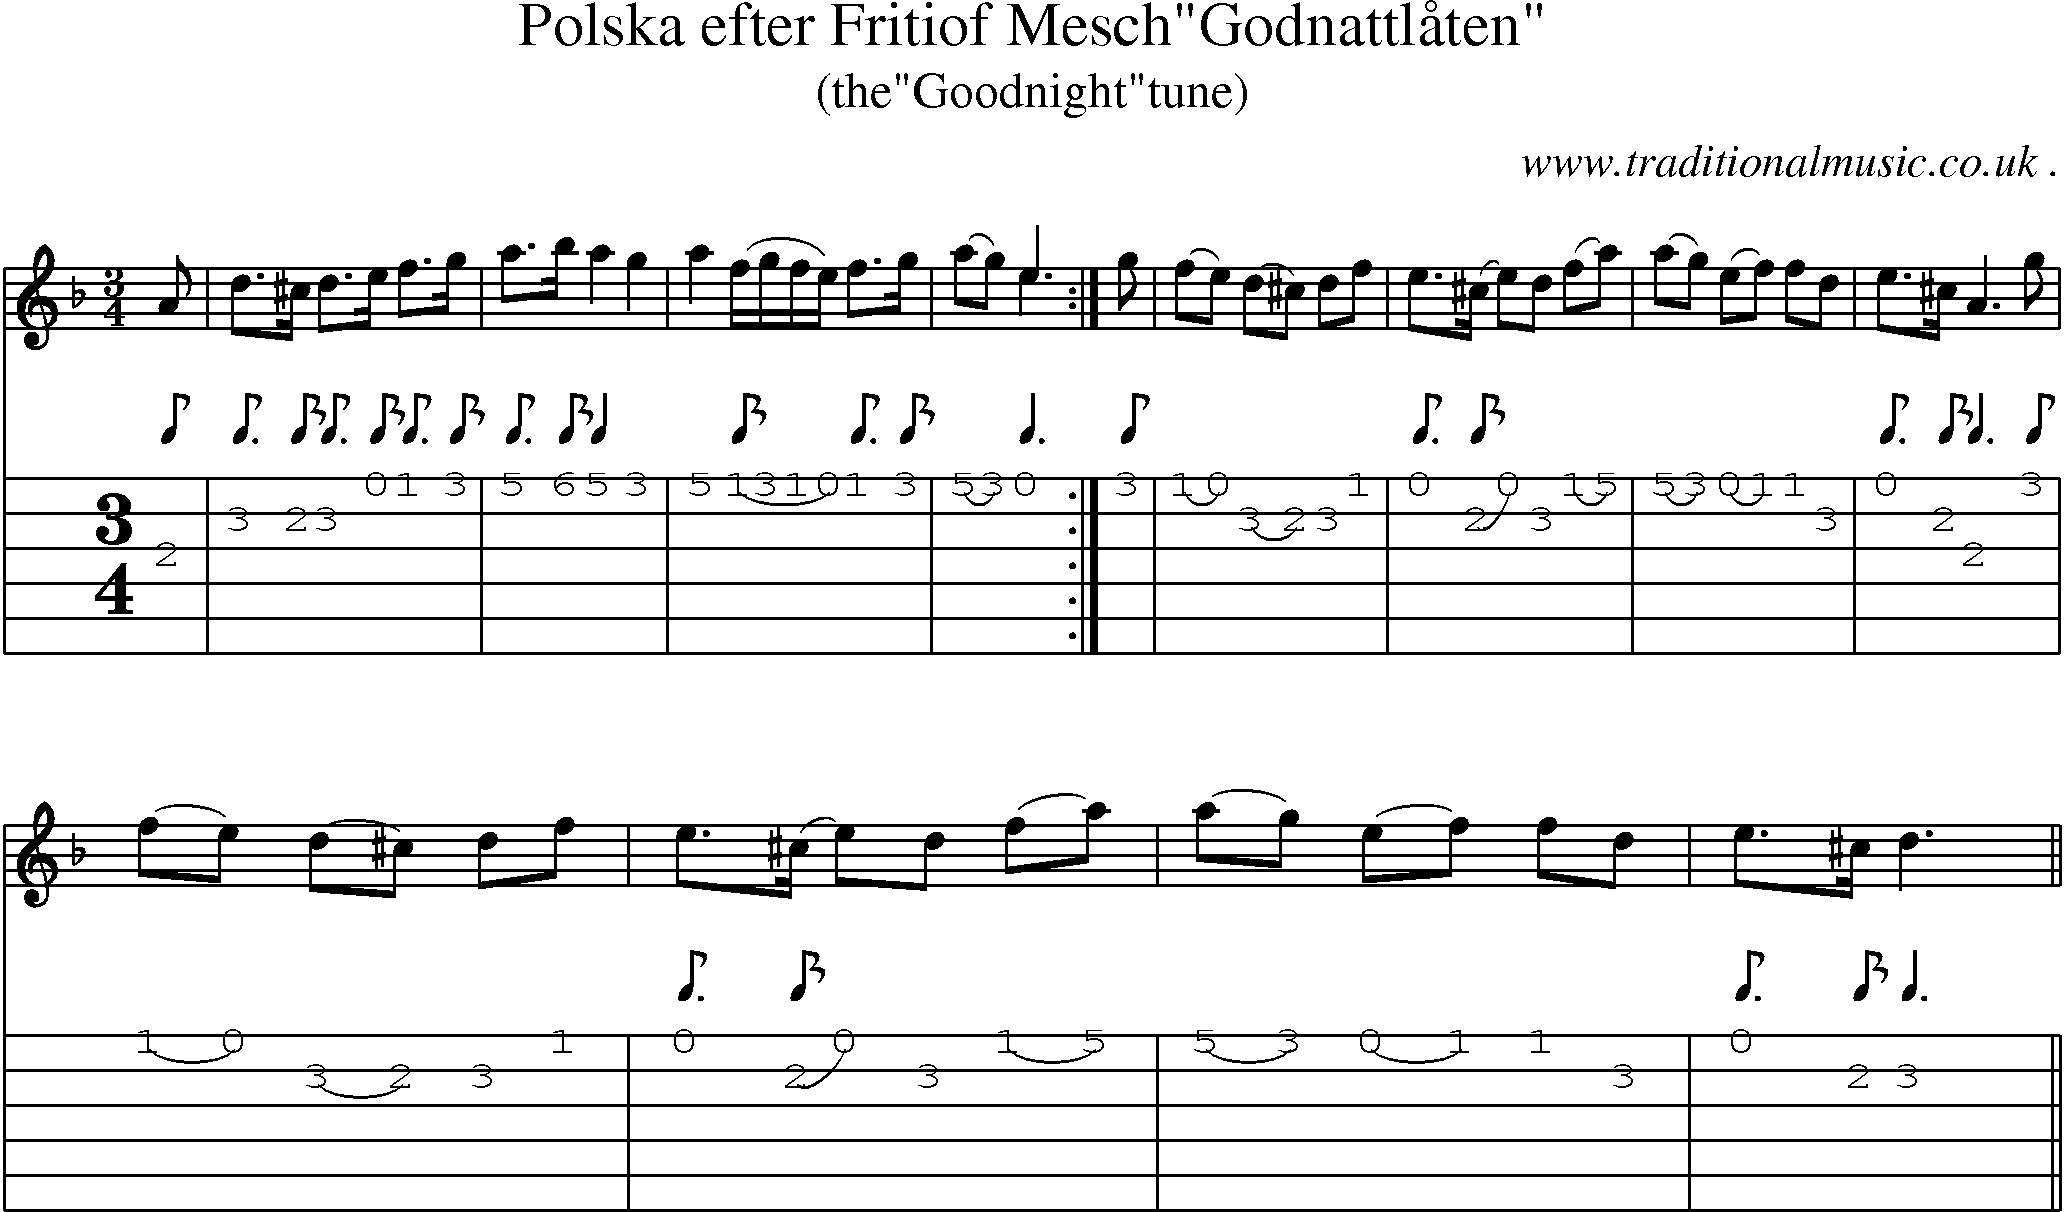 Sheet-Music and Guitar Tabs for Polska Efter Fritiof Meschgodnattlaaten